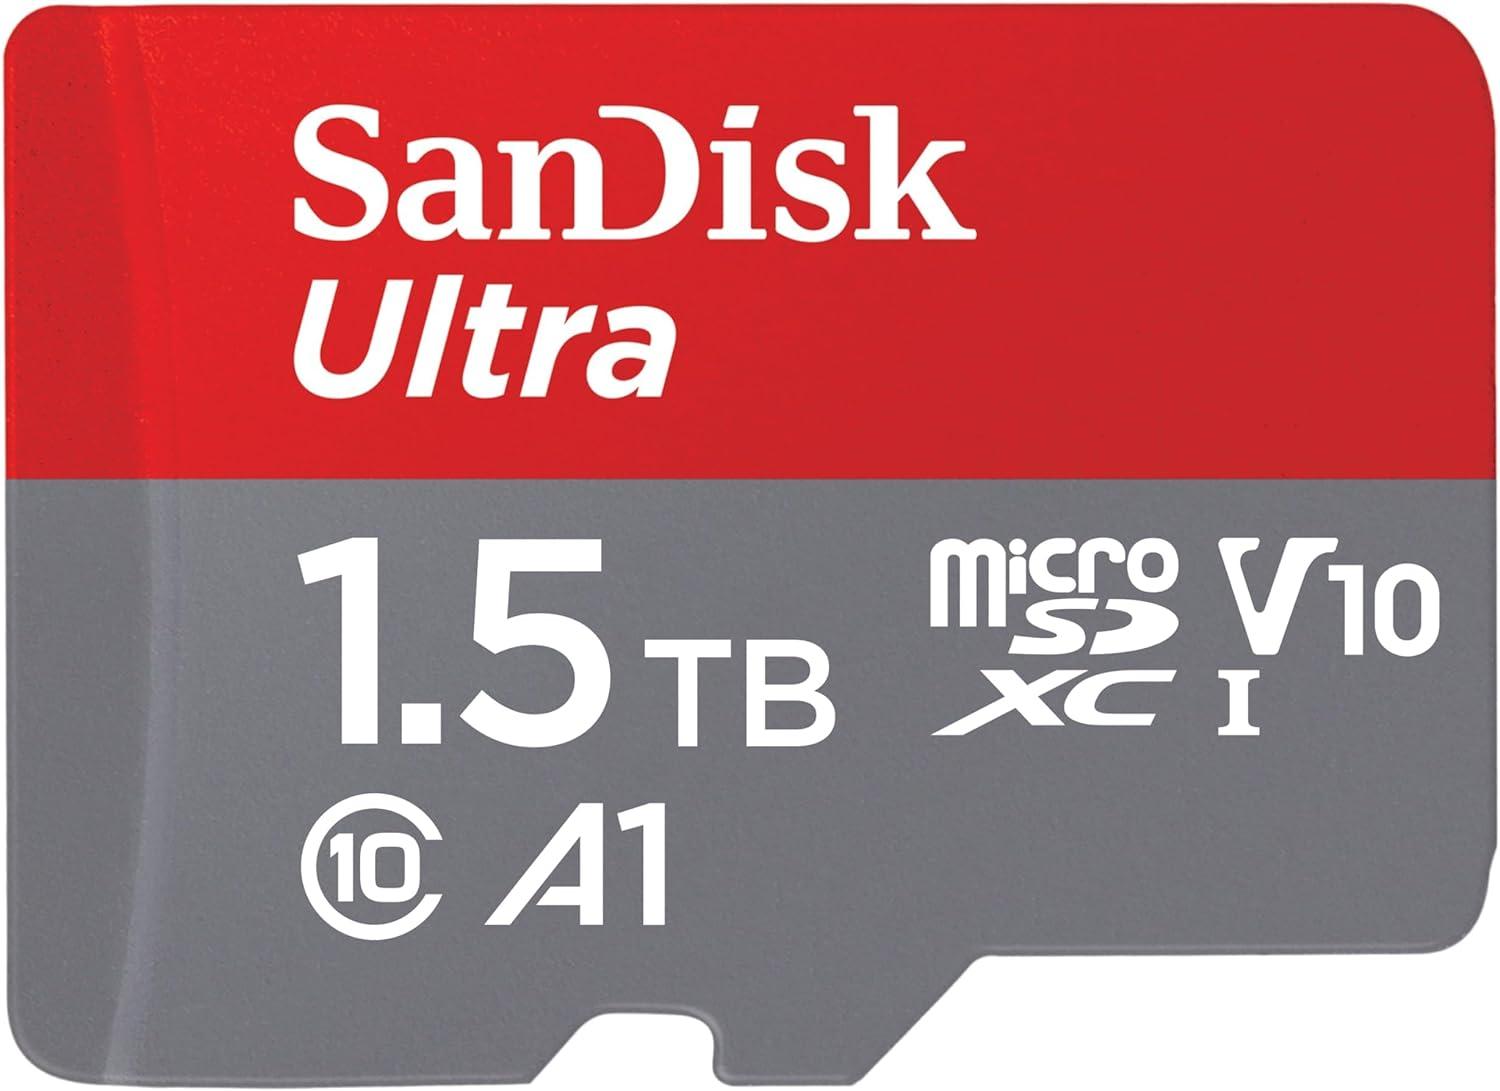 1.5TB SanDisk Ultra microSDXC UHS-I Memory Card for $87.99 Shipped